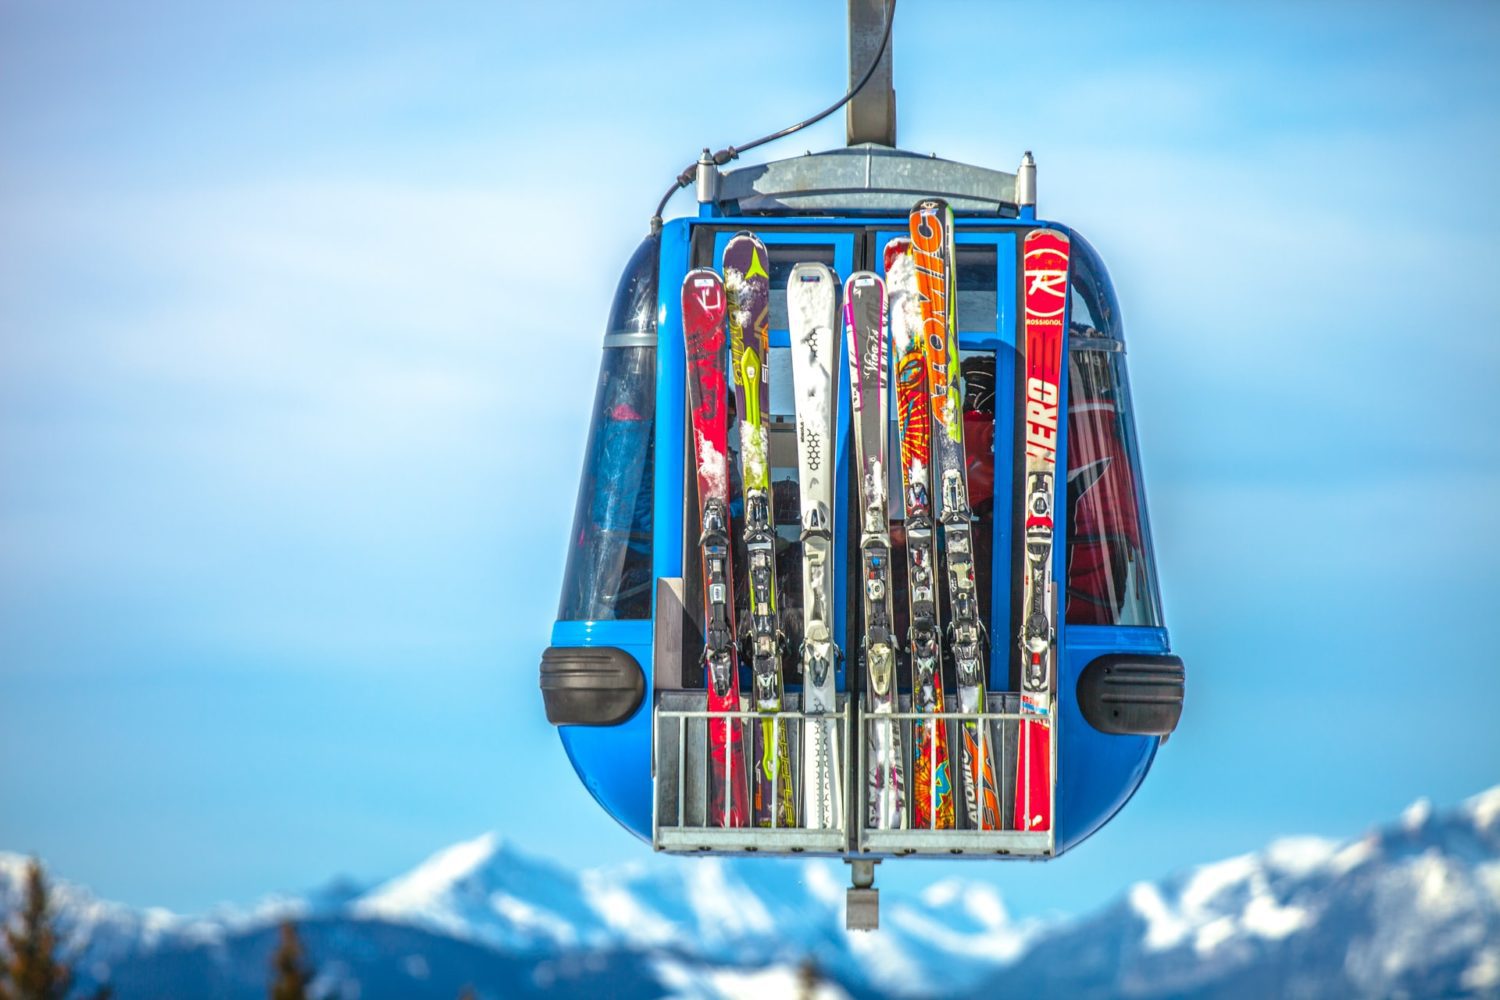 How to choose your ski destination